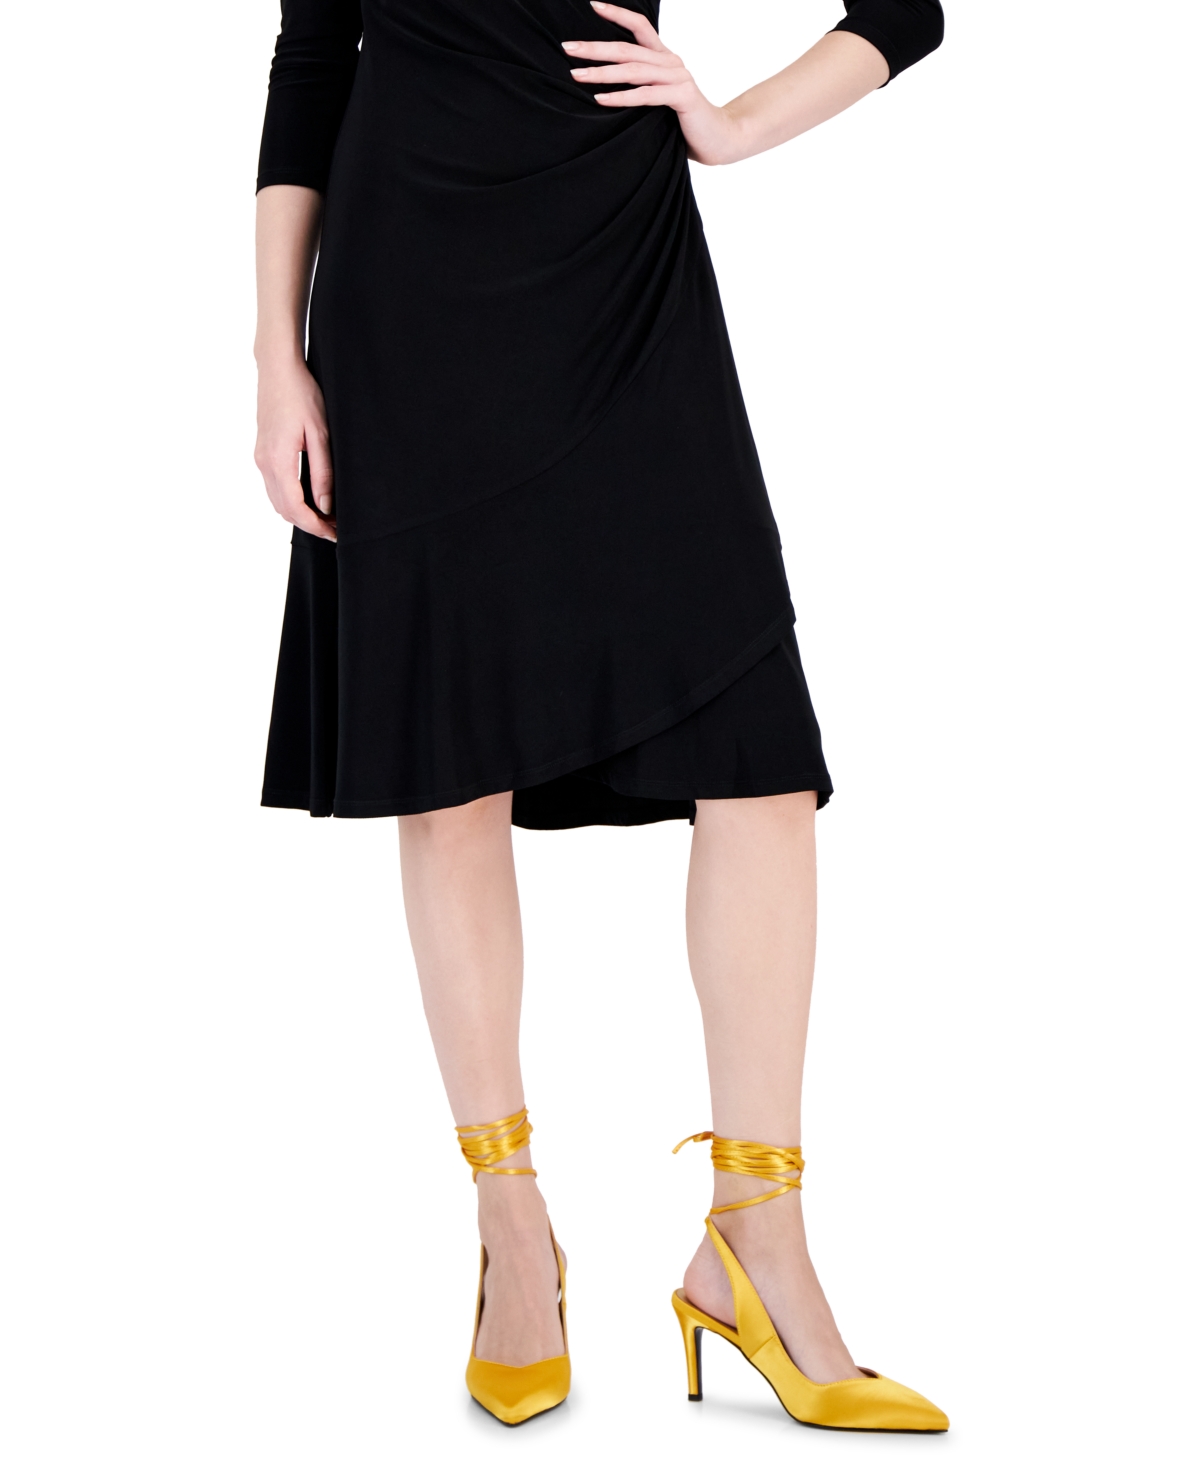 Vaila Shoes Women's Estelle Ankle-tie Dress Pumps-extended Sizes 9-14 In Gold